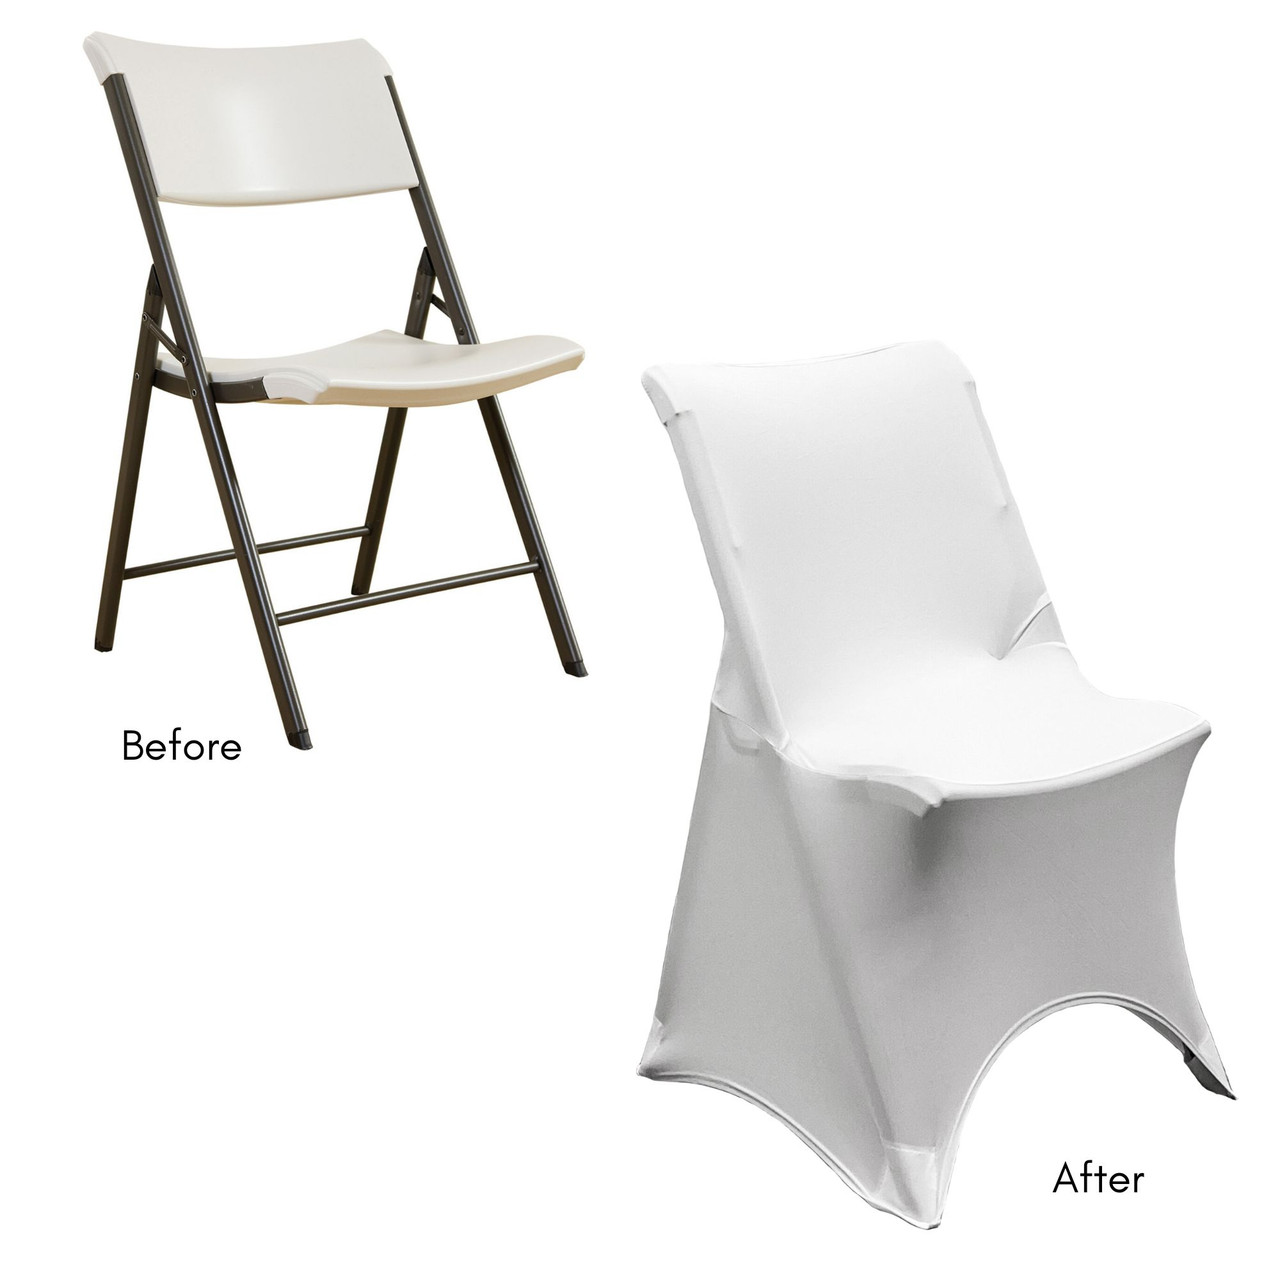 Spandex Folding Chair Cover in Hunter Green – Urquid Linen